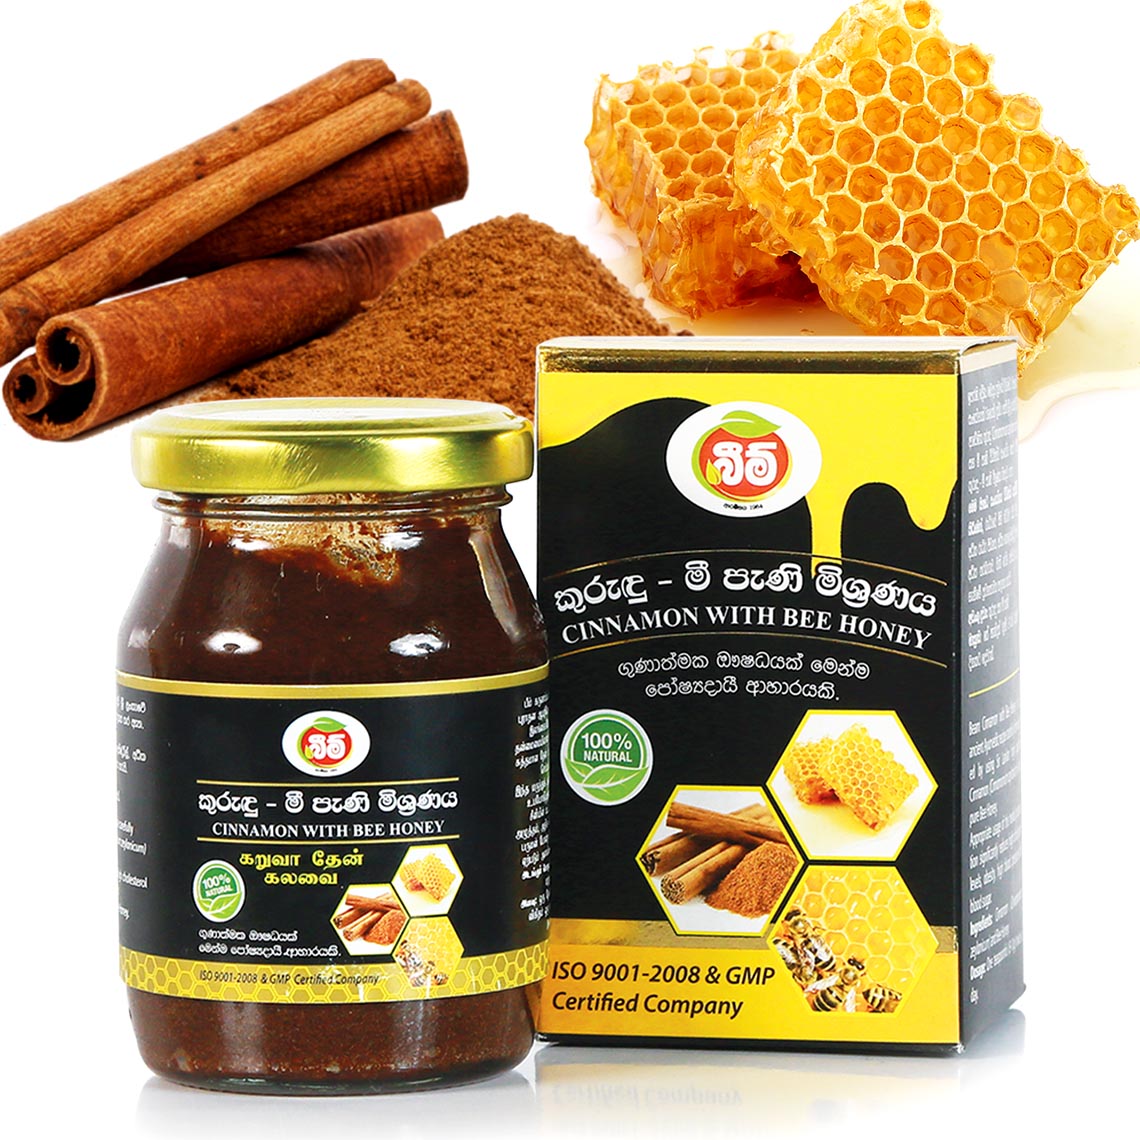 Cinnamon with Bee Honey